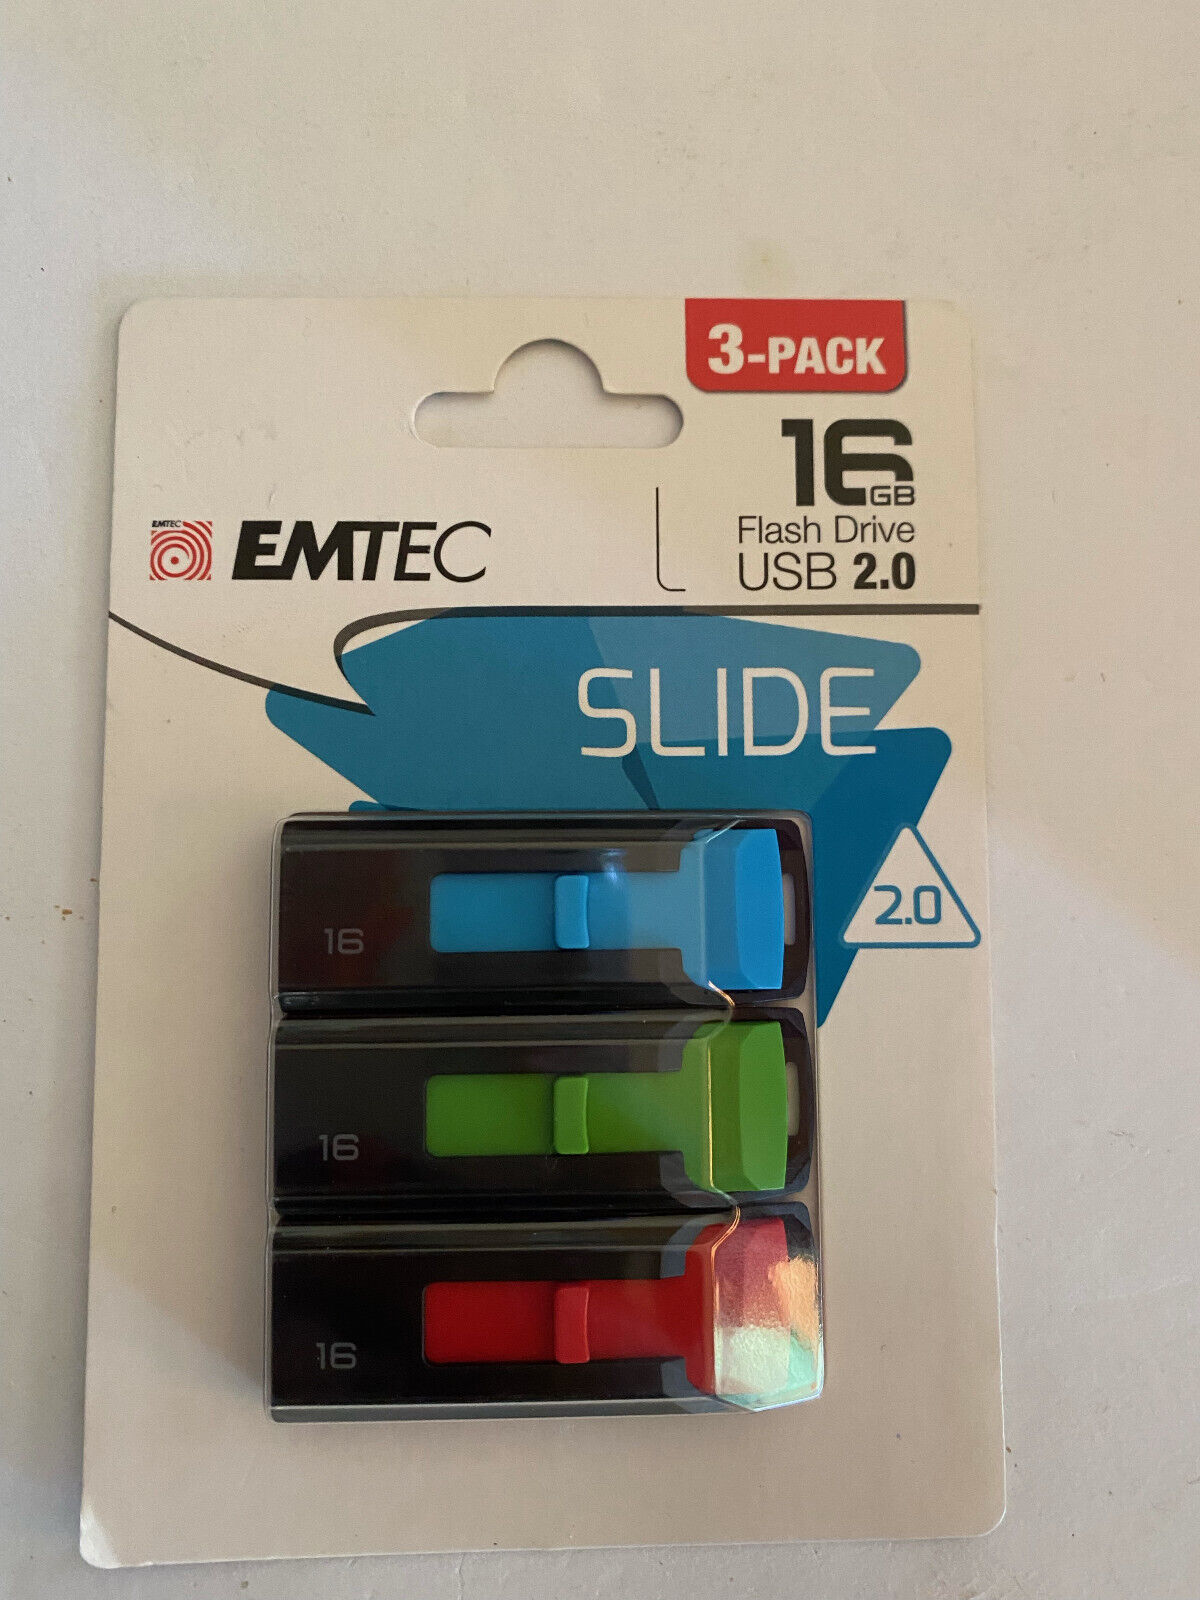 EMTEC Slide USB 2.0 16GB Flash Drive 3-Pack